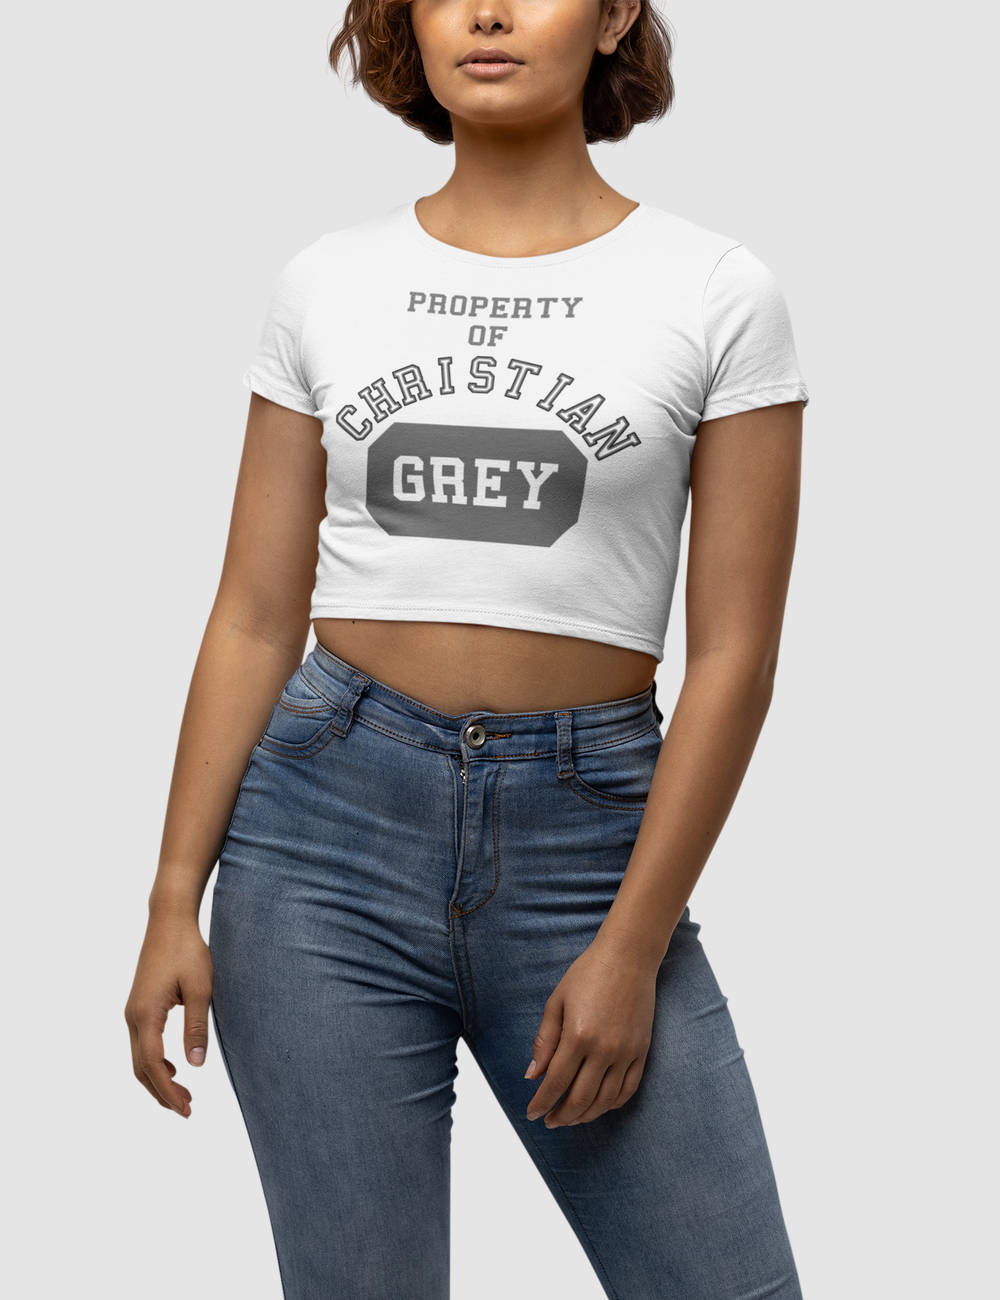 Property Of Christian Grey | Women's Fitted Crop Top T-Shirt OniTakai